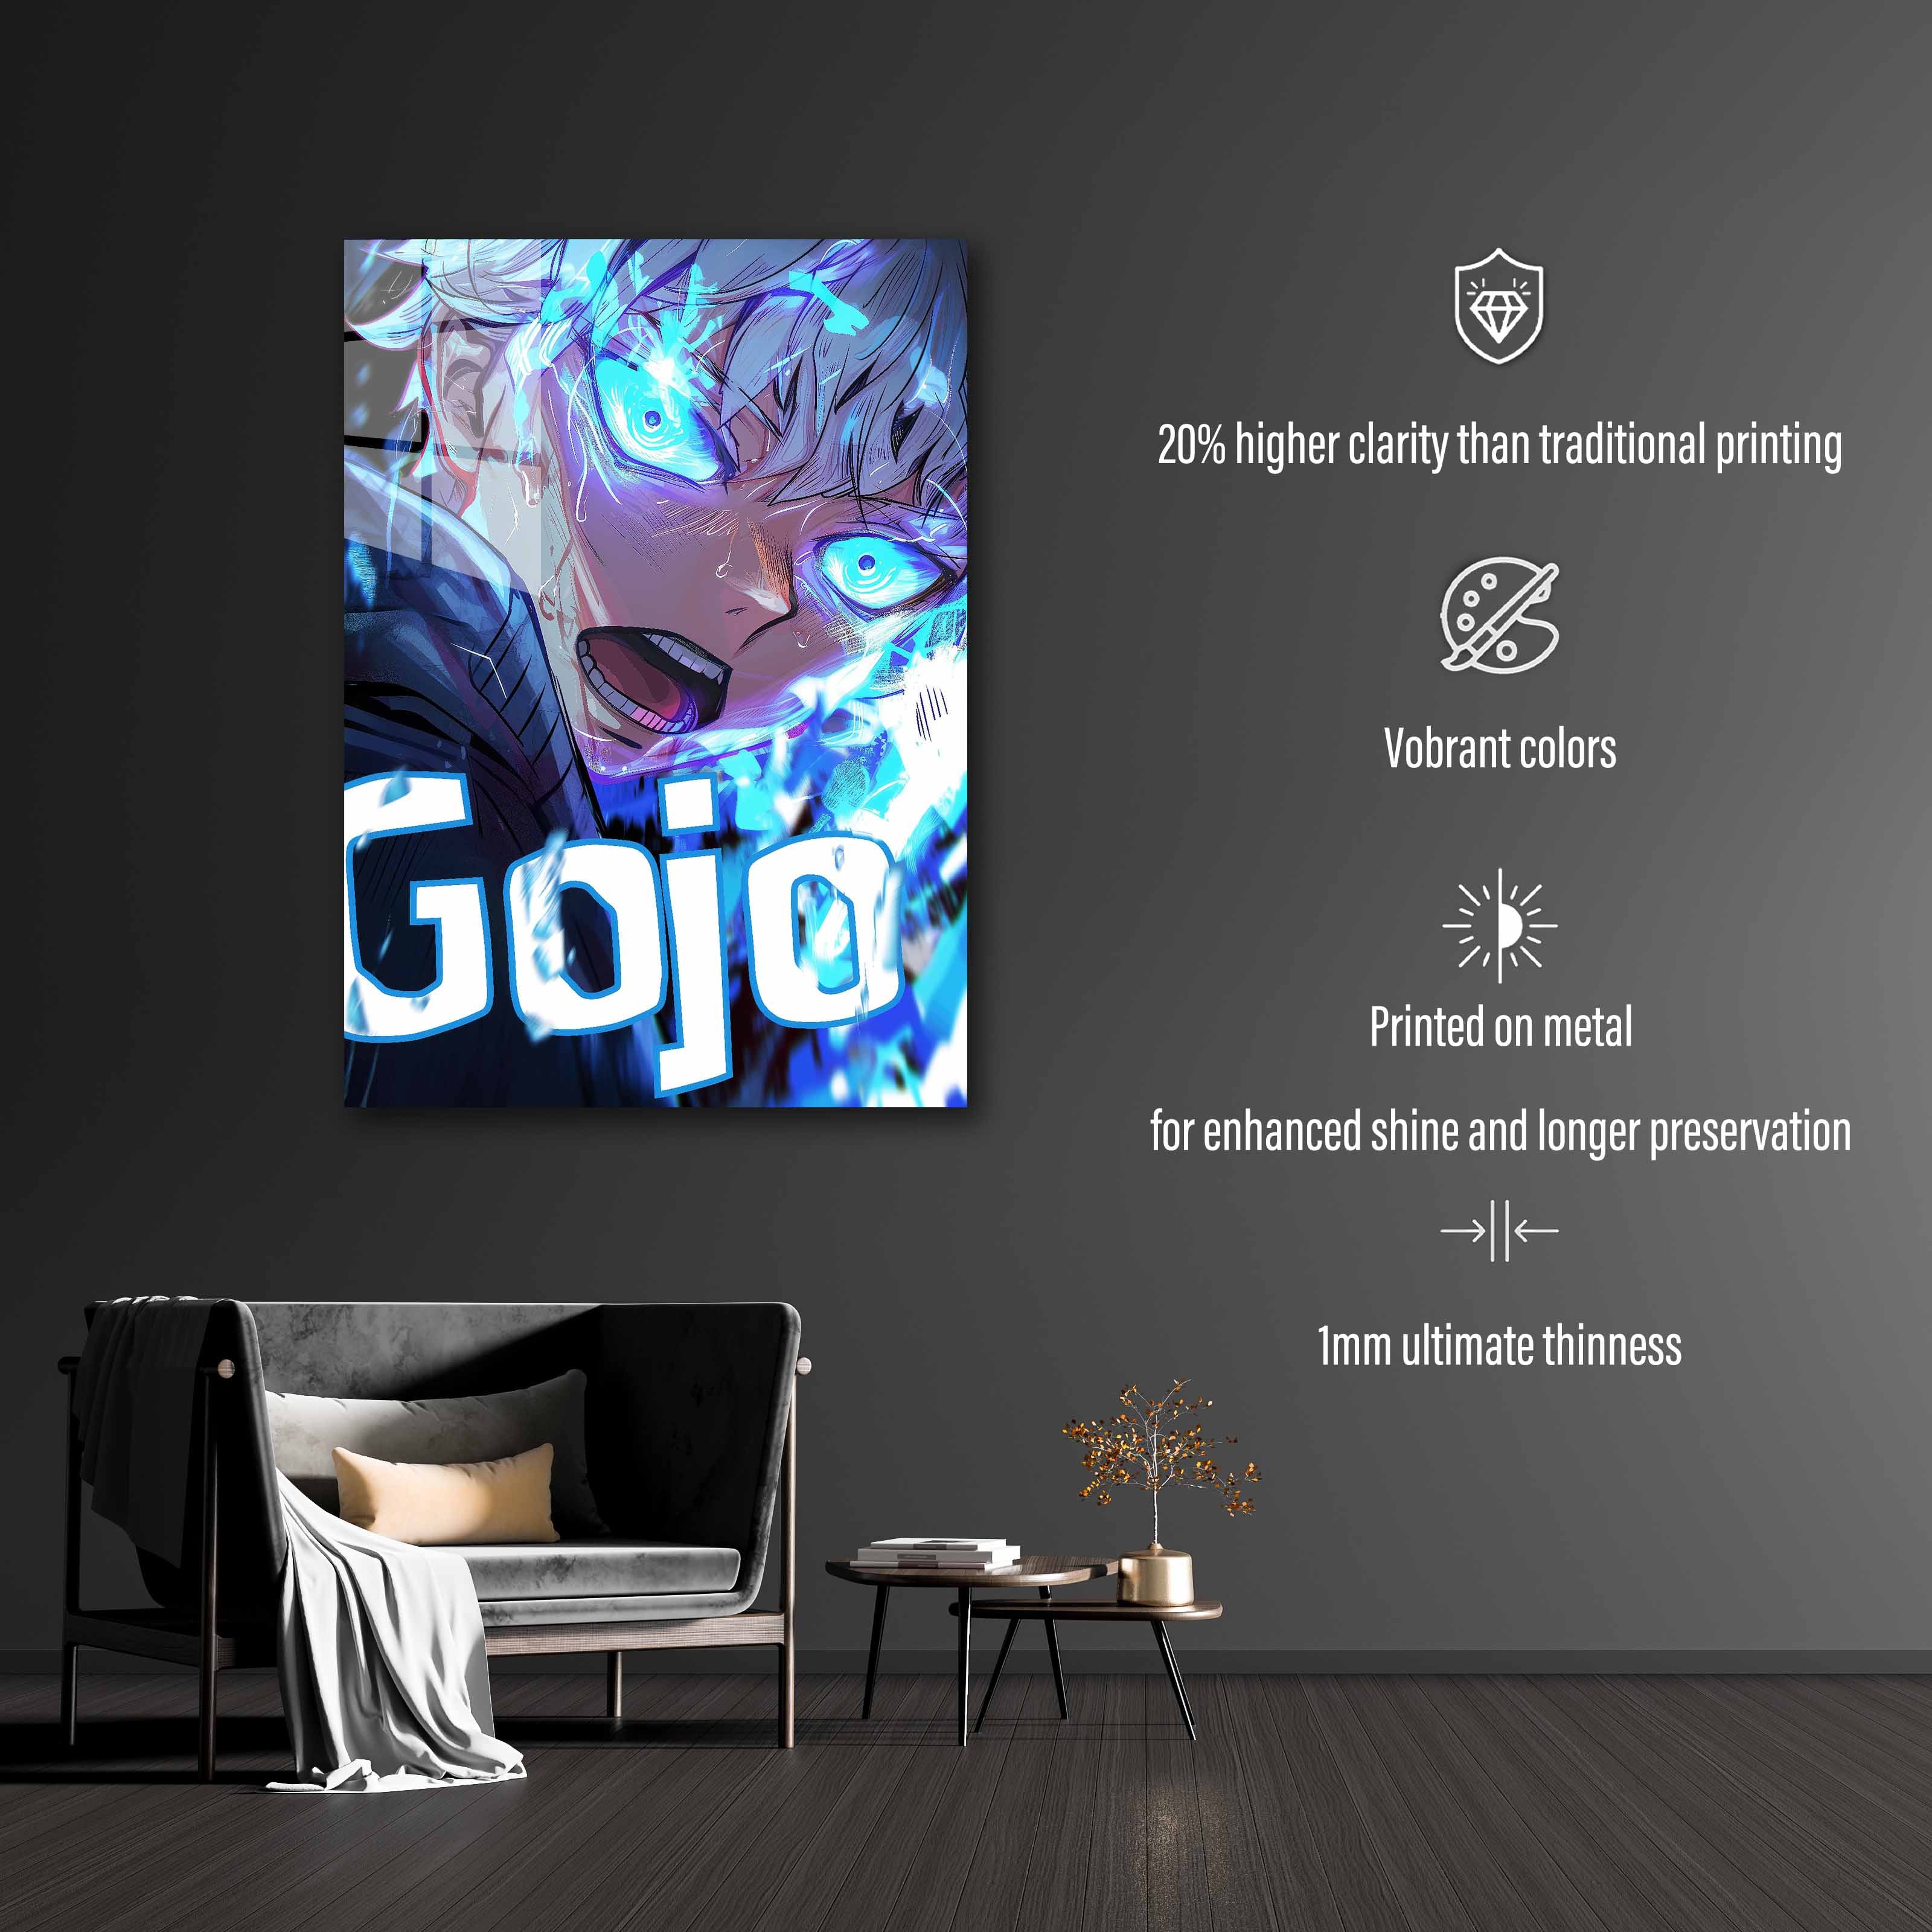 Gojo ConceptArt from jujutsu kaisen 1-designed by @Silentheal